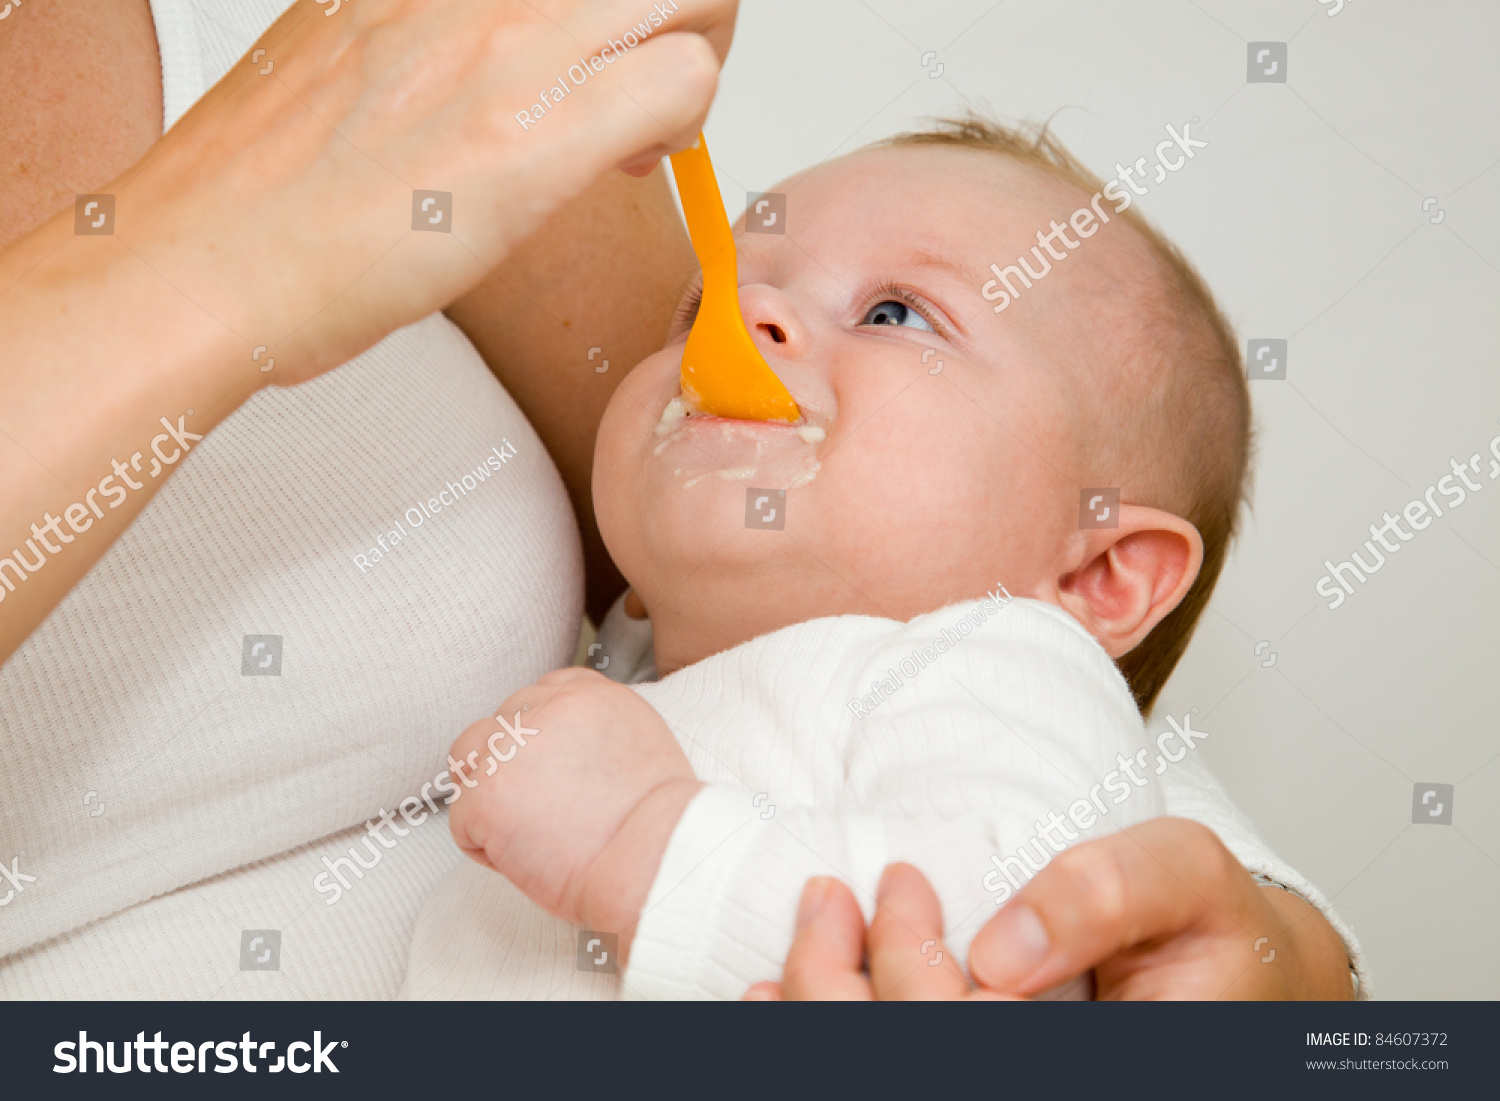 Докорм в питании ребенка